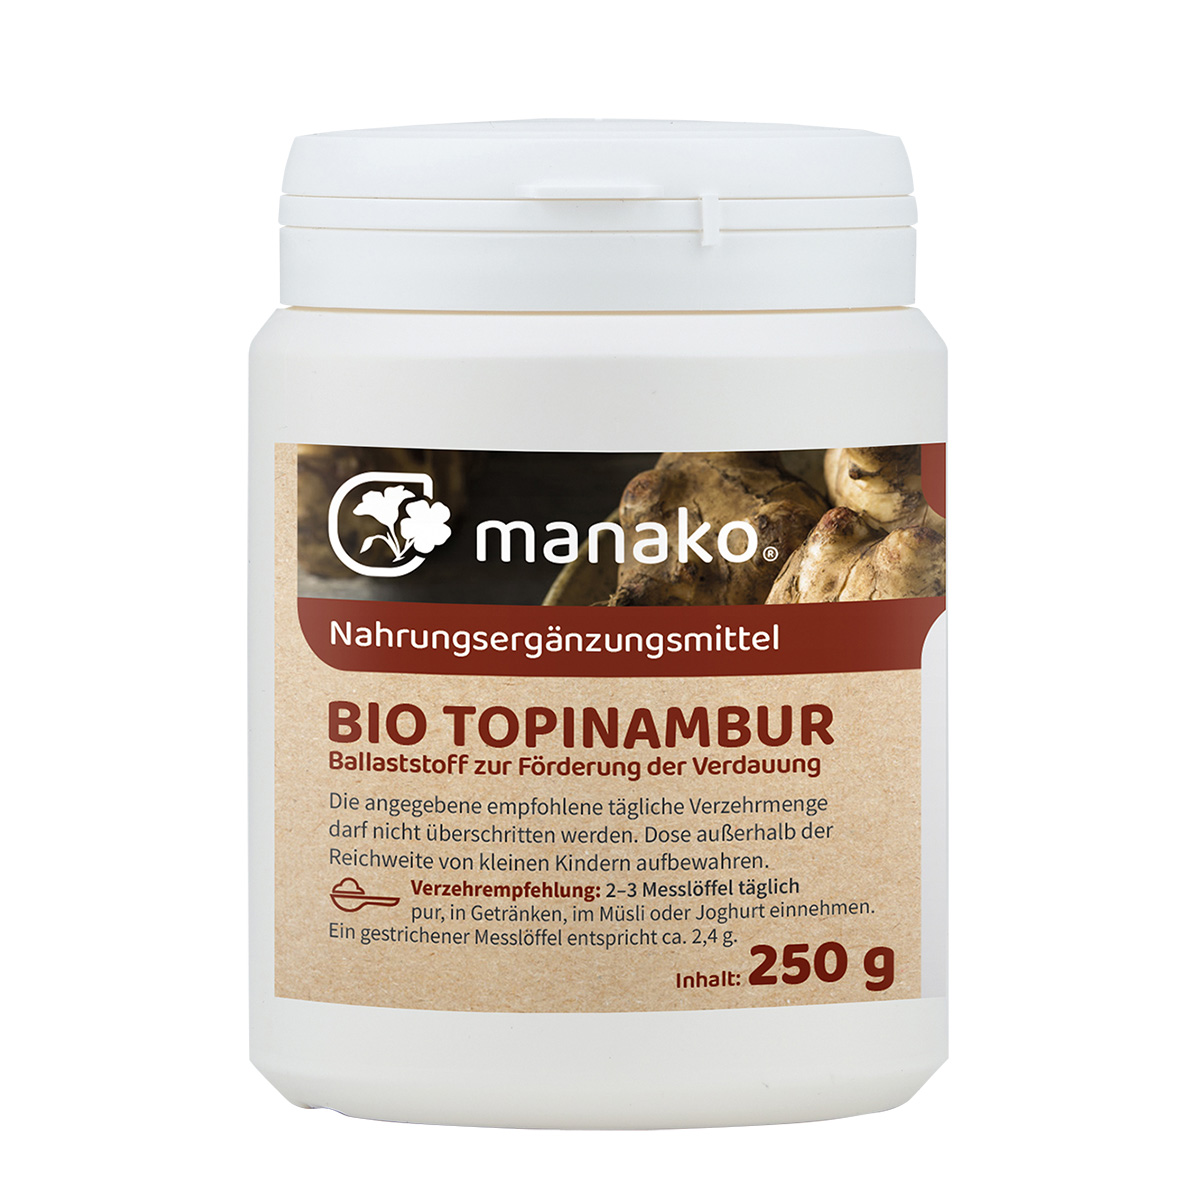 NEU: manako ® prebiotic Bio Topinambur Pulver 250g Dose